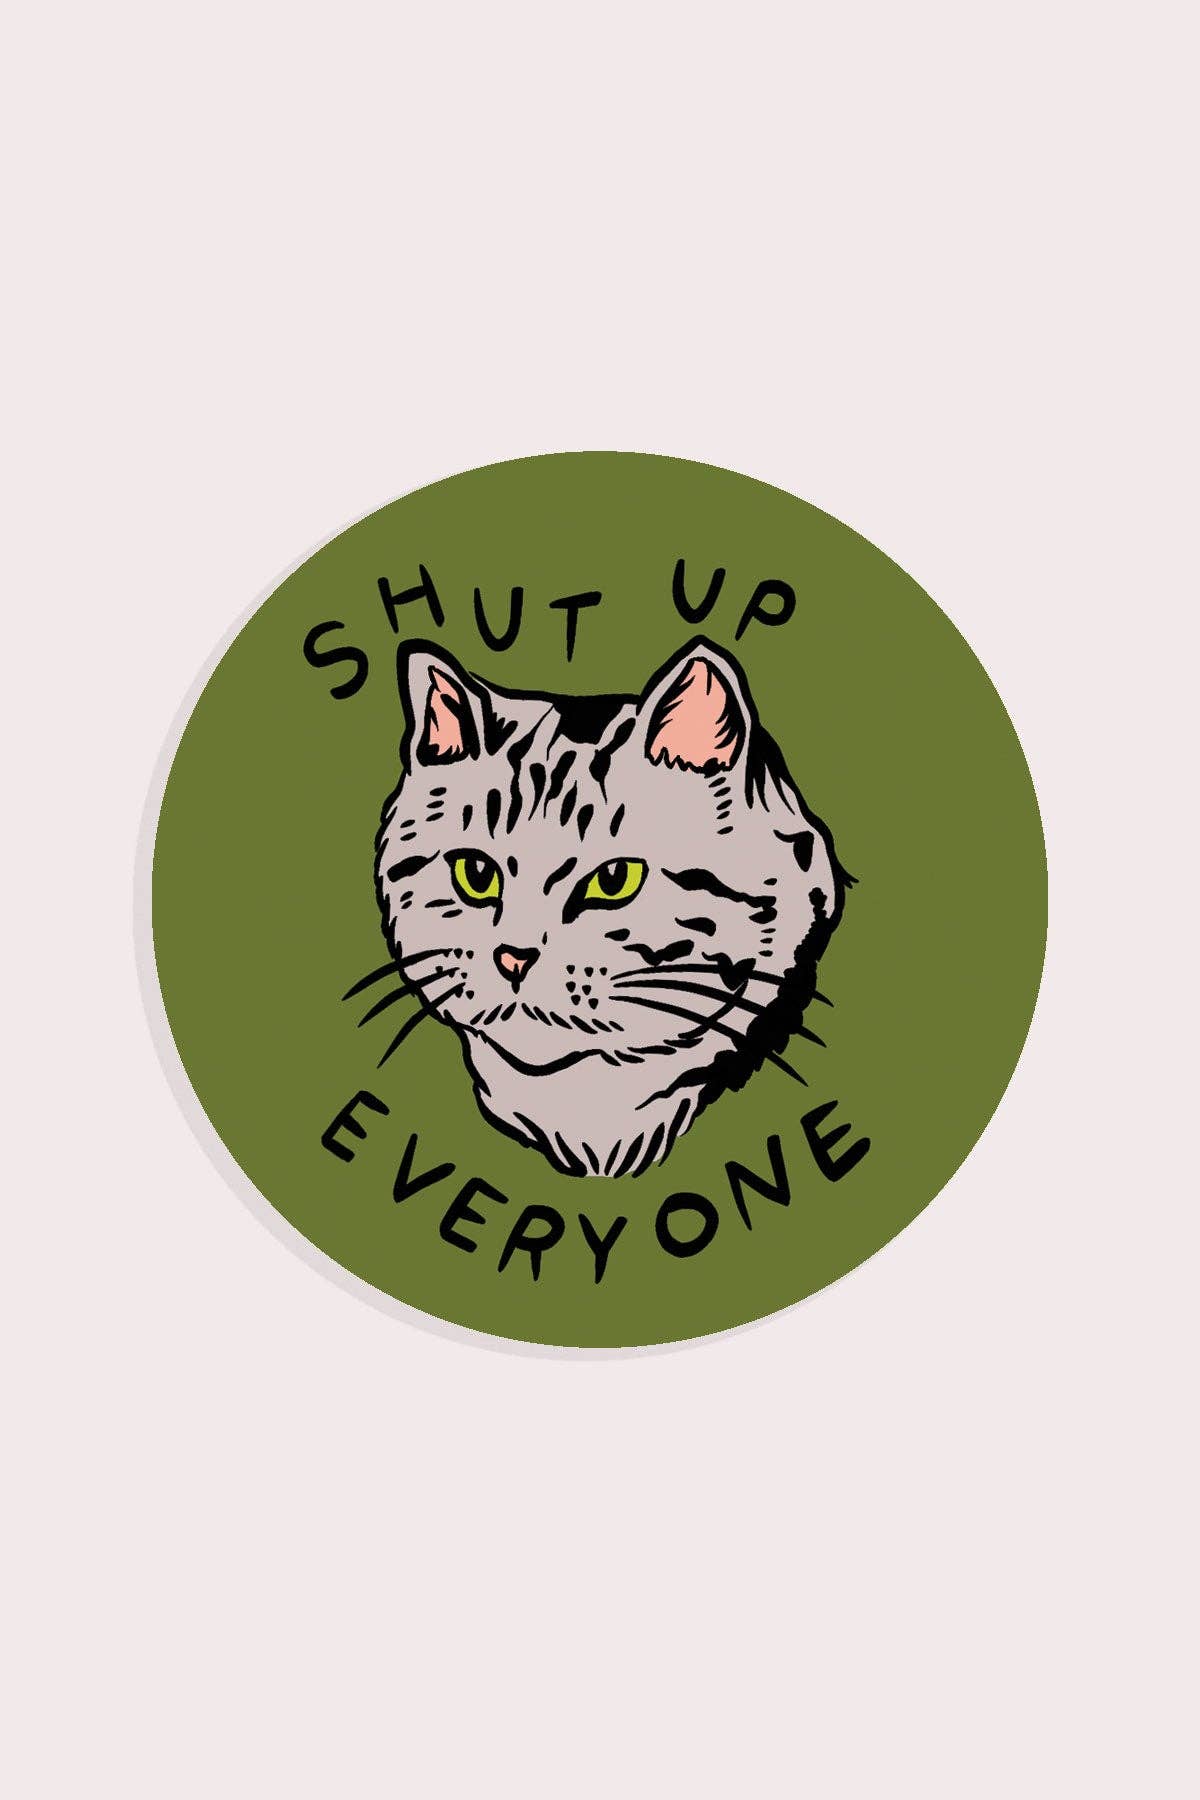 Shut Up Everyone Sticker